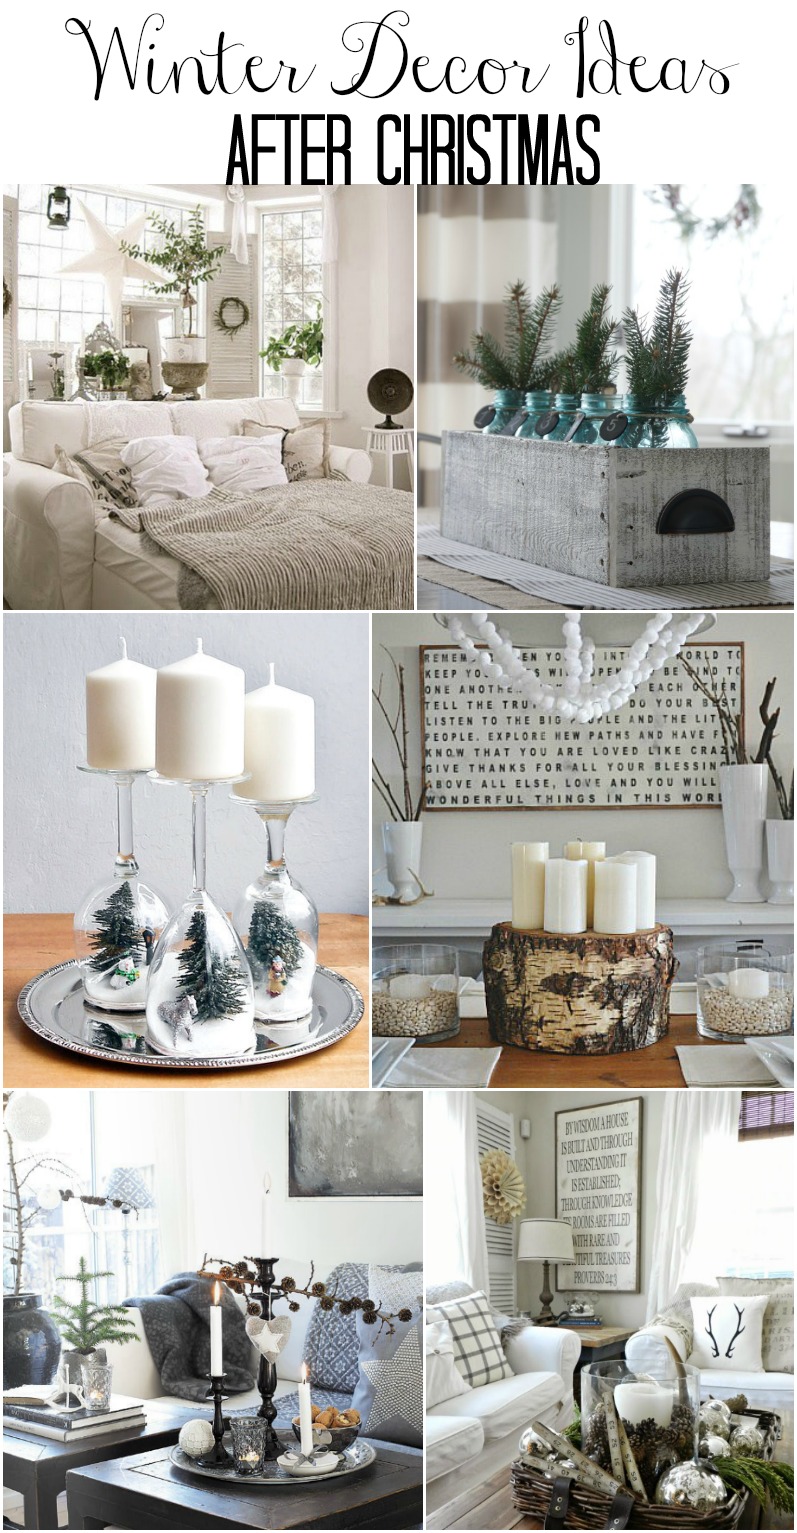 Winter Decor Ideas for the Home